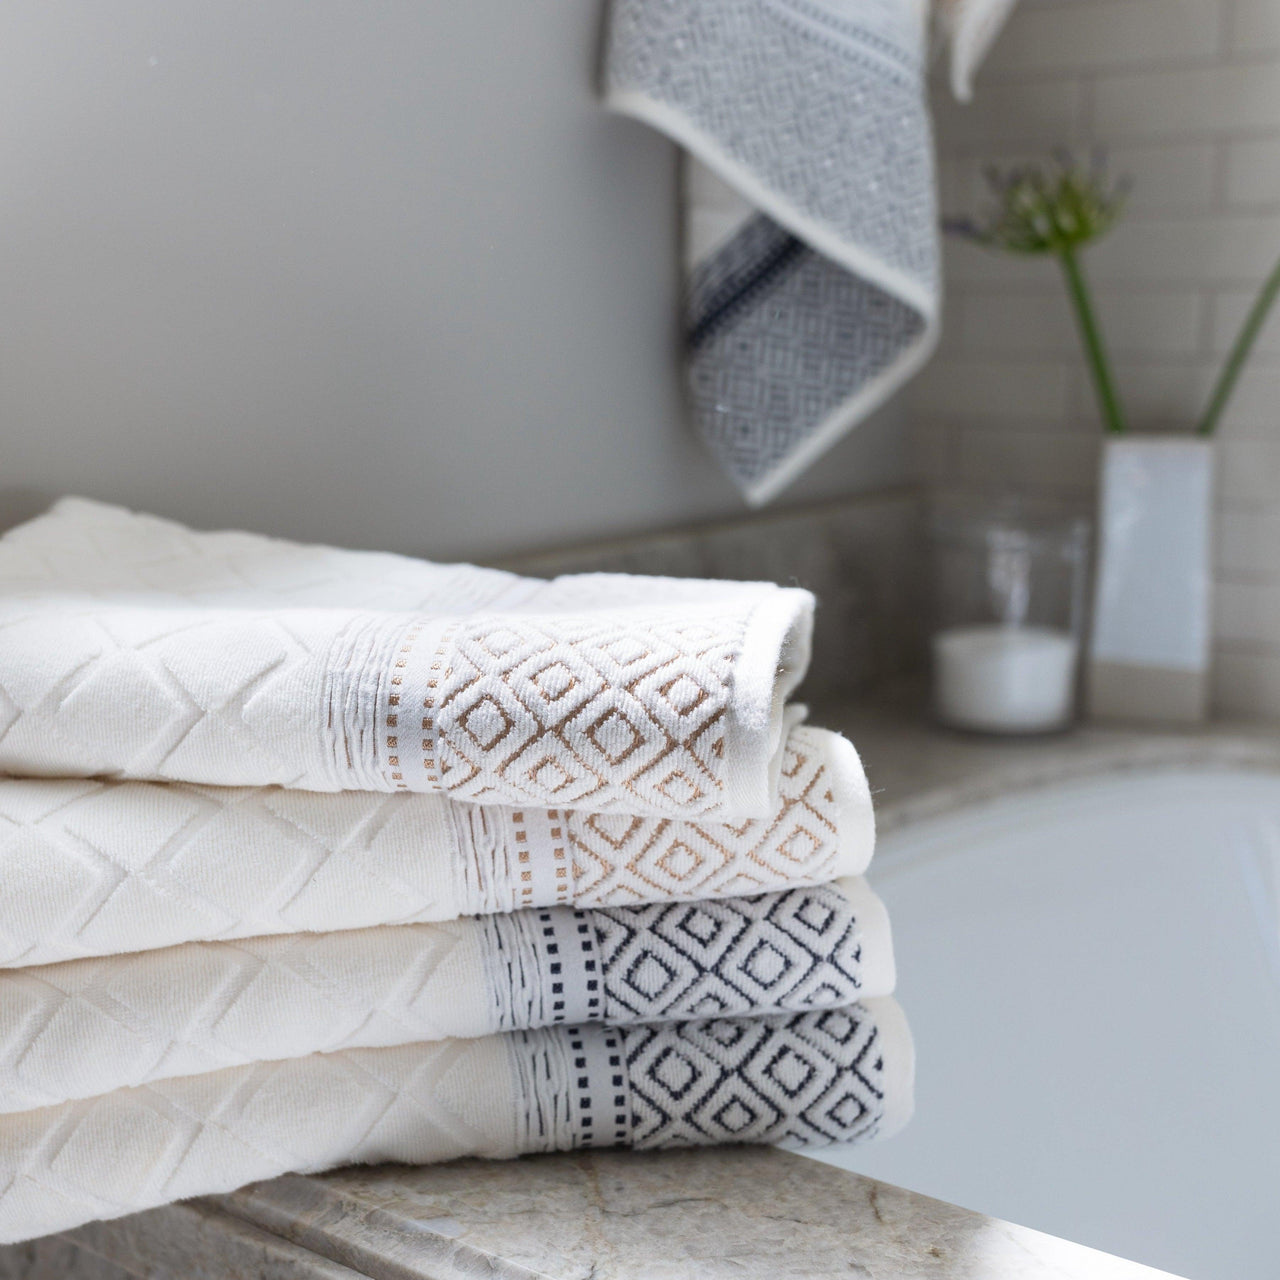 The Modern Ikat Towel